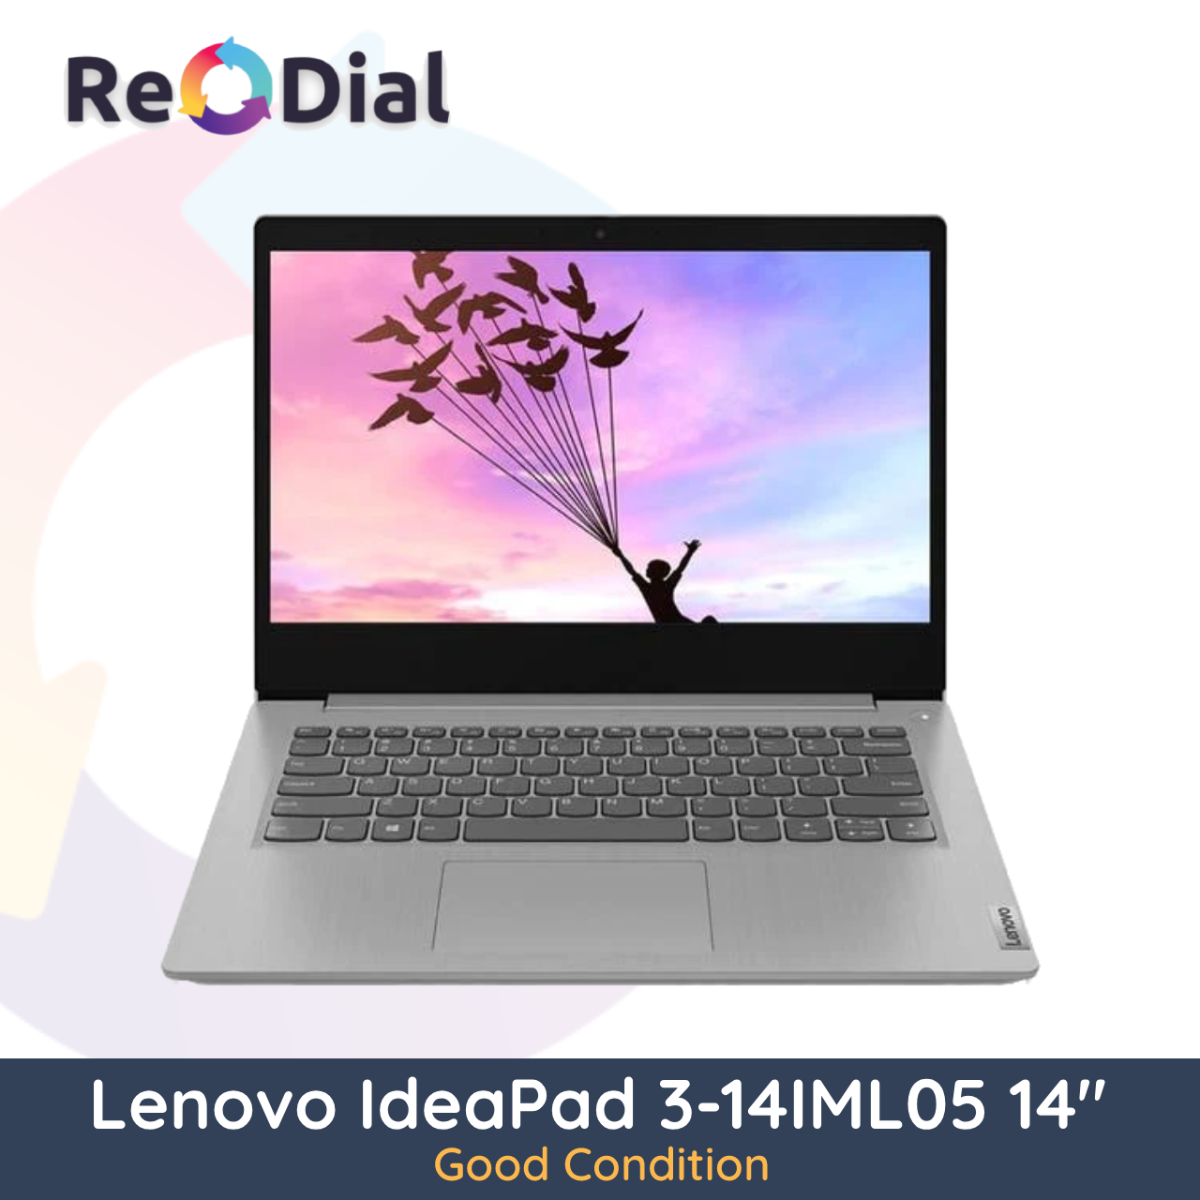 Lenovo IdeaPad 3-14IML05 14" Laptop i5-10210U 256GB 8GB RAM - Good Condition